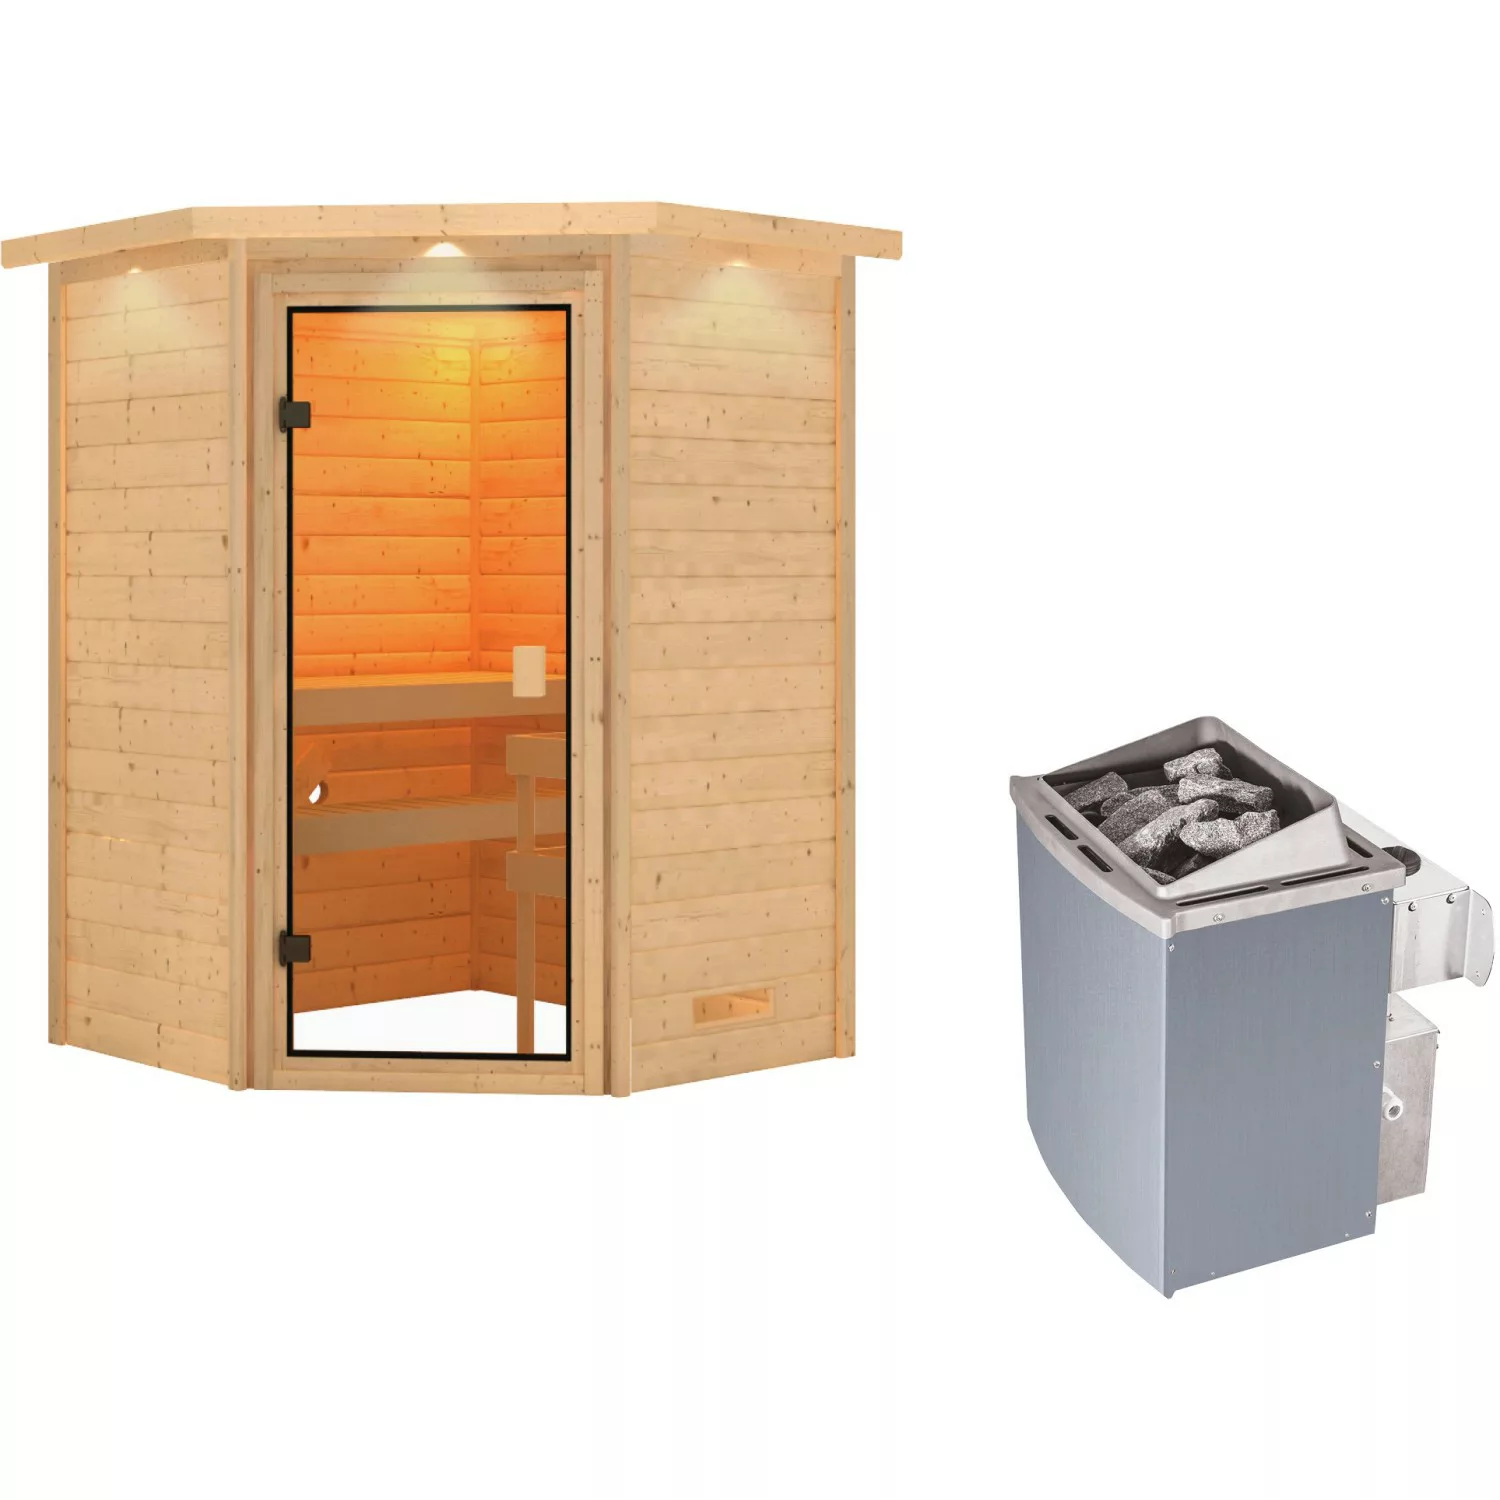 Woodfeeling Sauna Antonia inkl. 9 kW Ofen mit integr. Strg., LED-Dachkranz günstig online kaufen